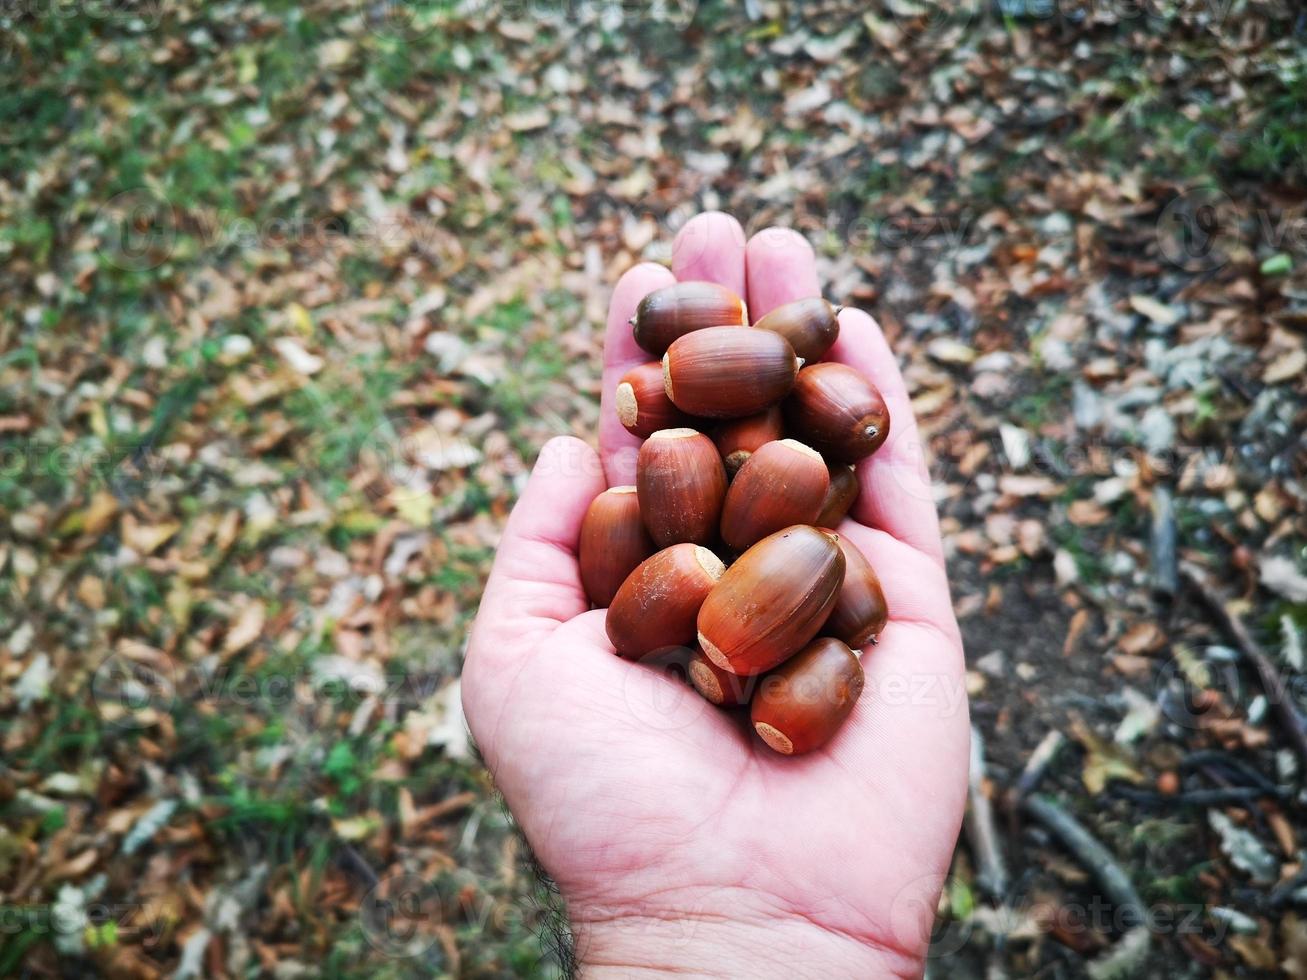 acorns in the hand photo